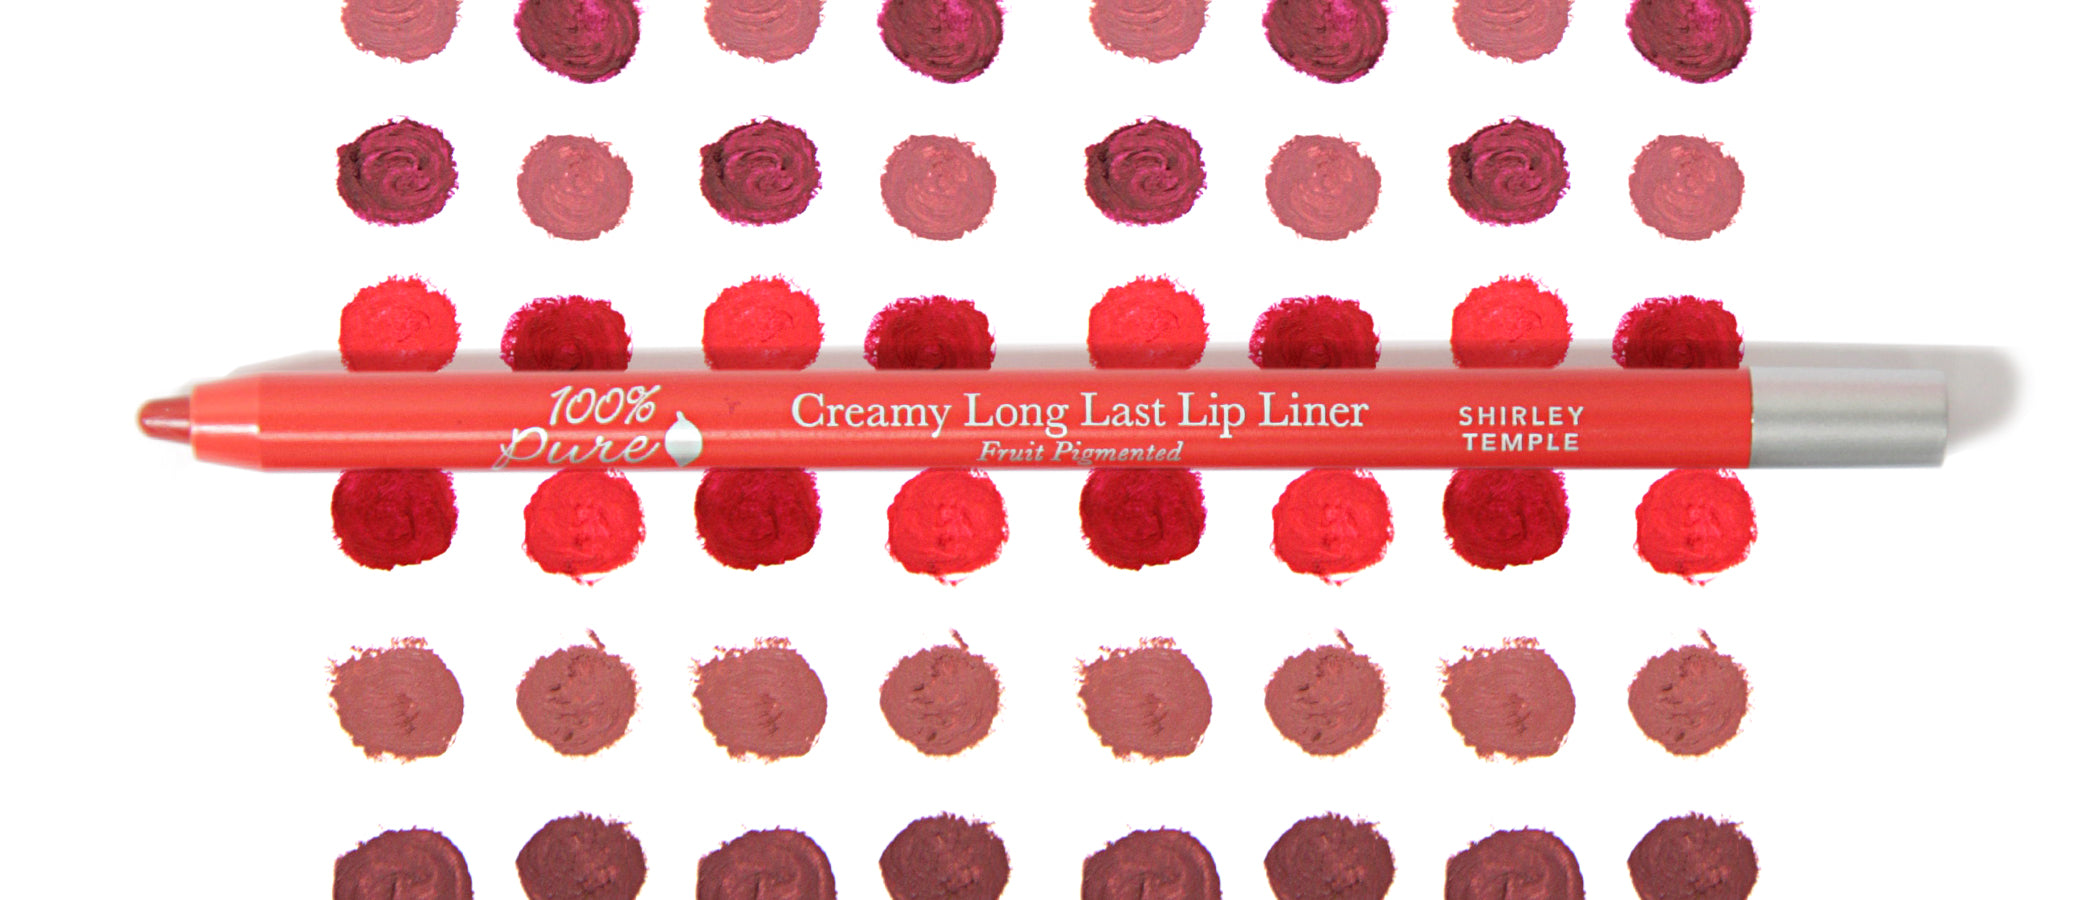 100% PURE Creamy Long Last Lip Liner: Shirley Temple